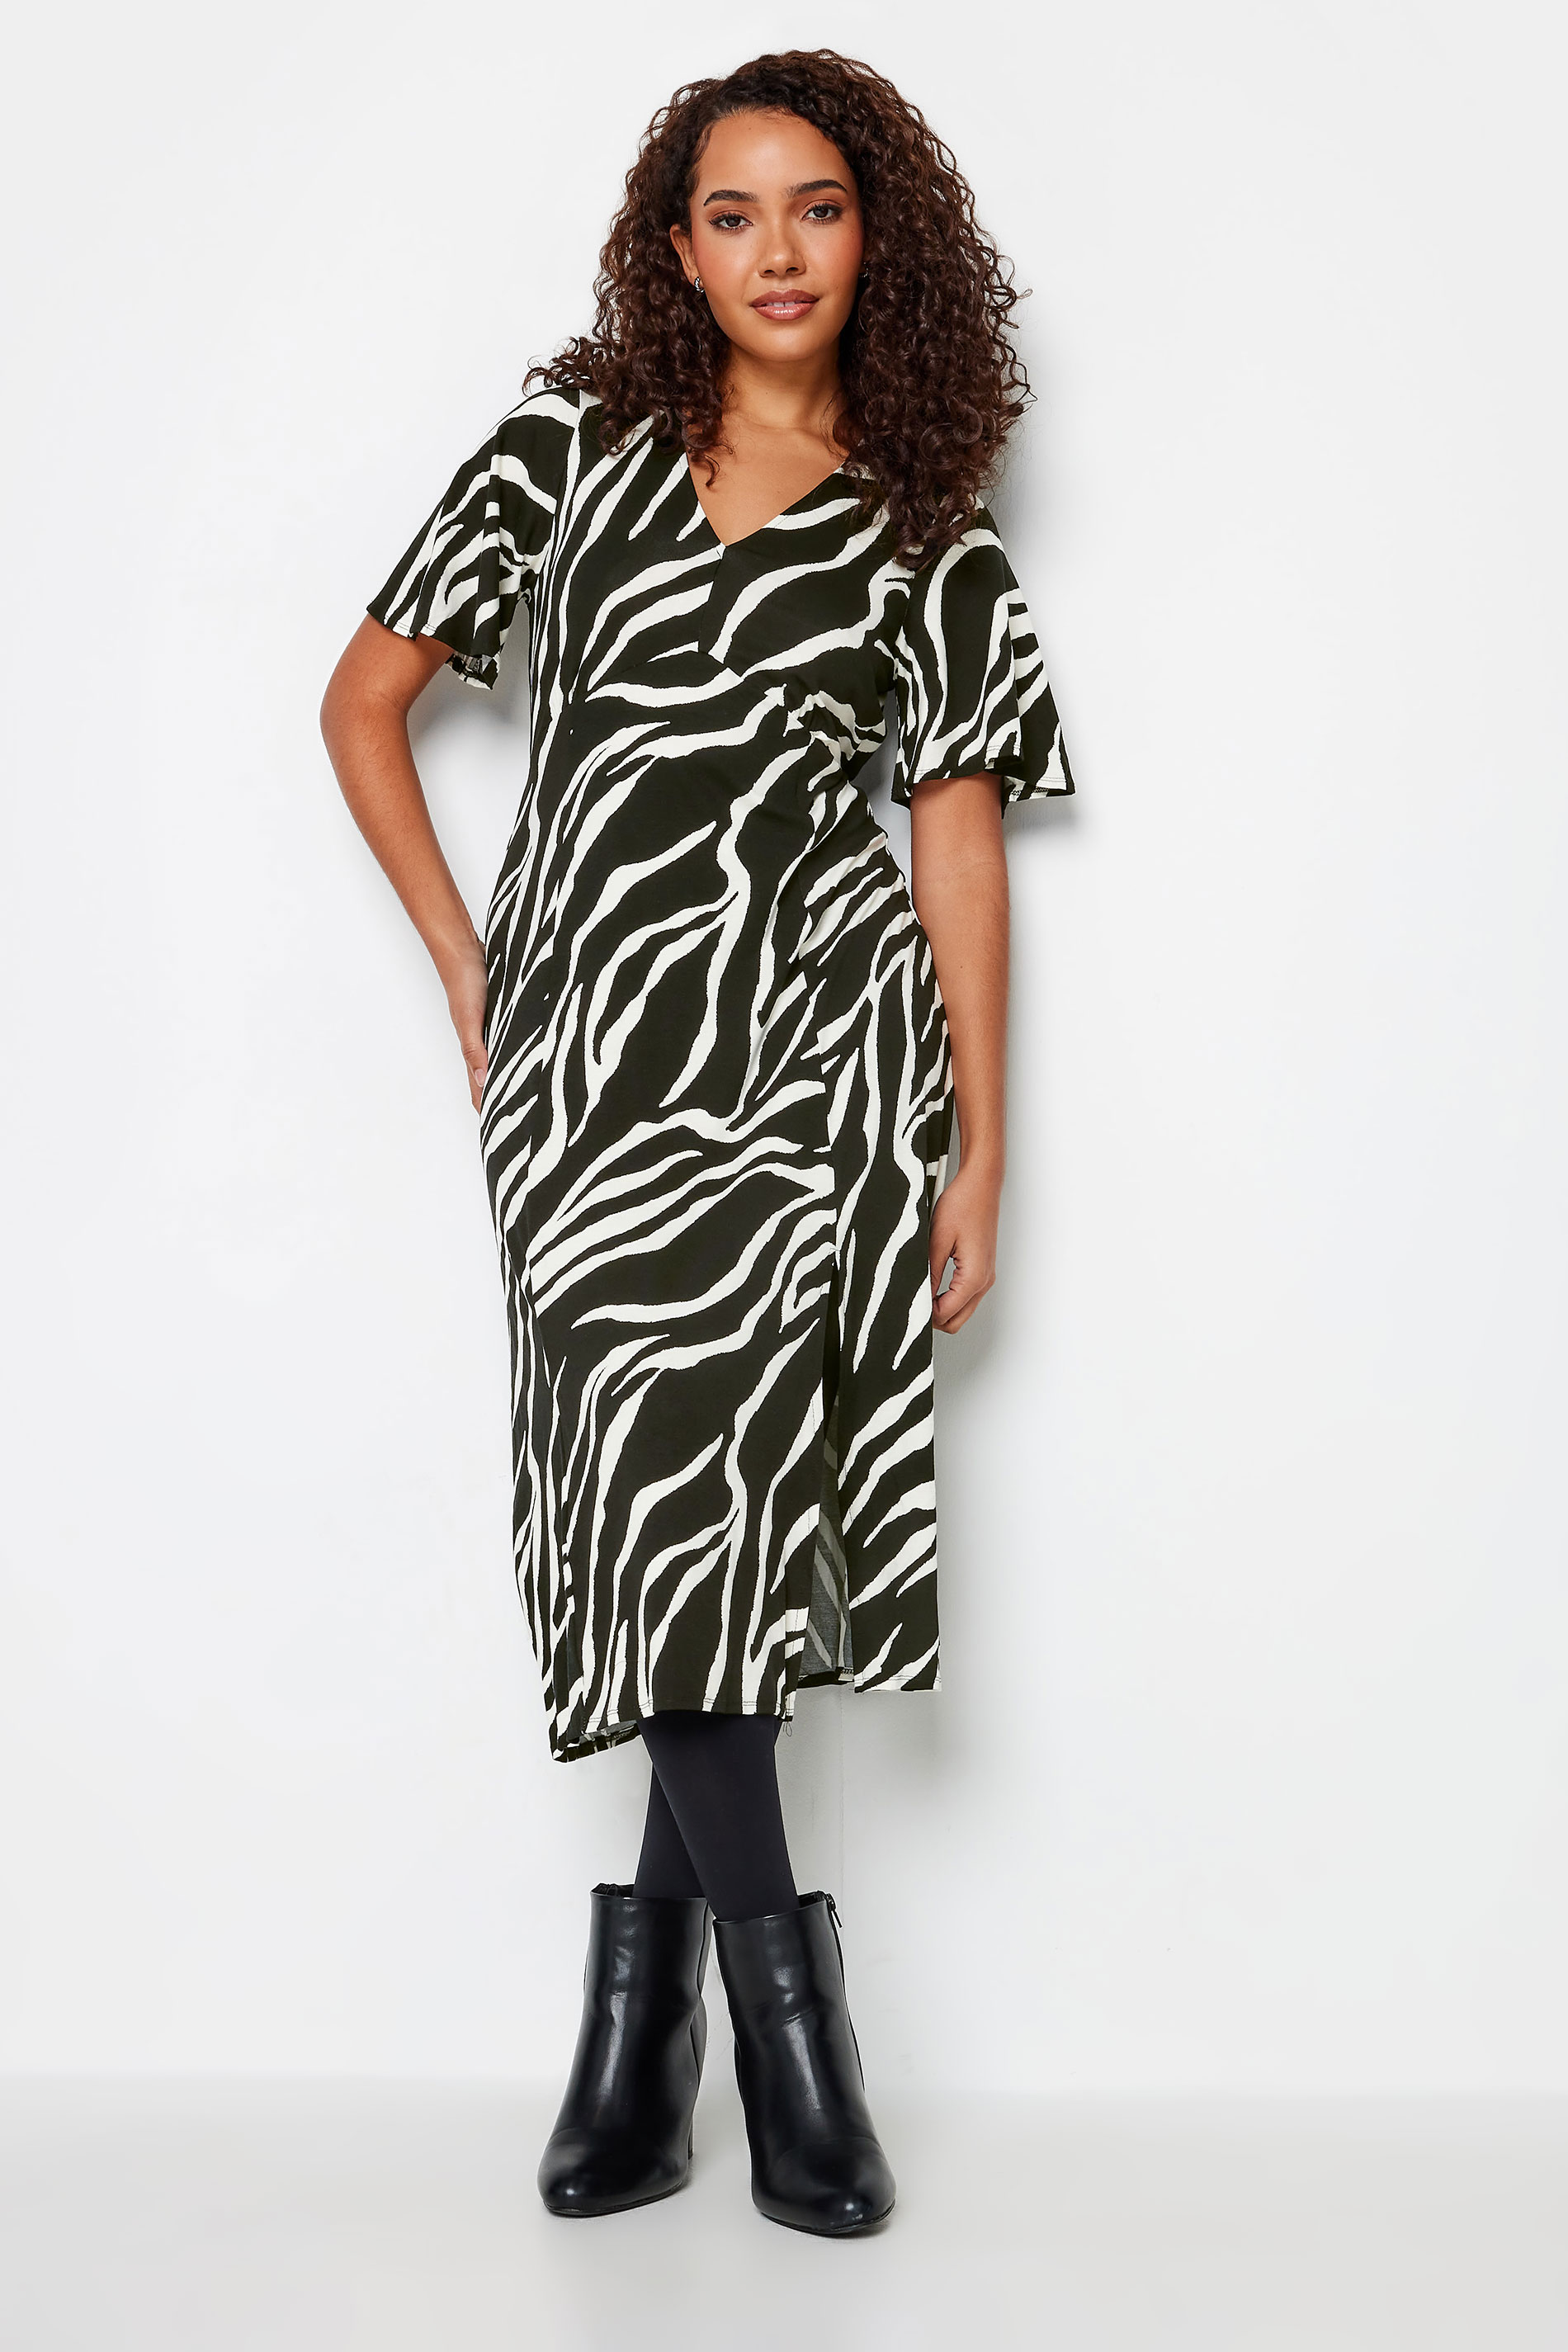 M&Co Black & White Swirl Print Midi Dress  | M&Co 2